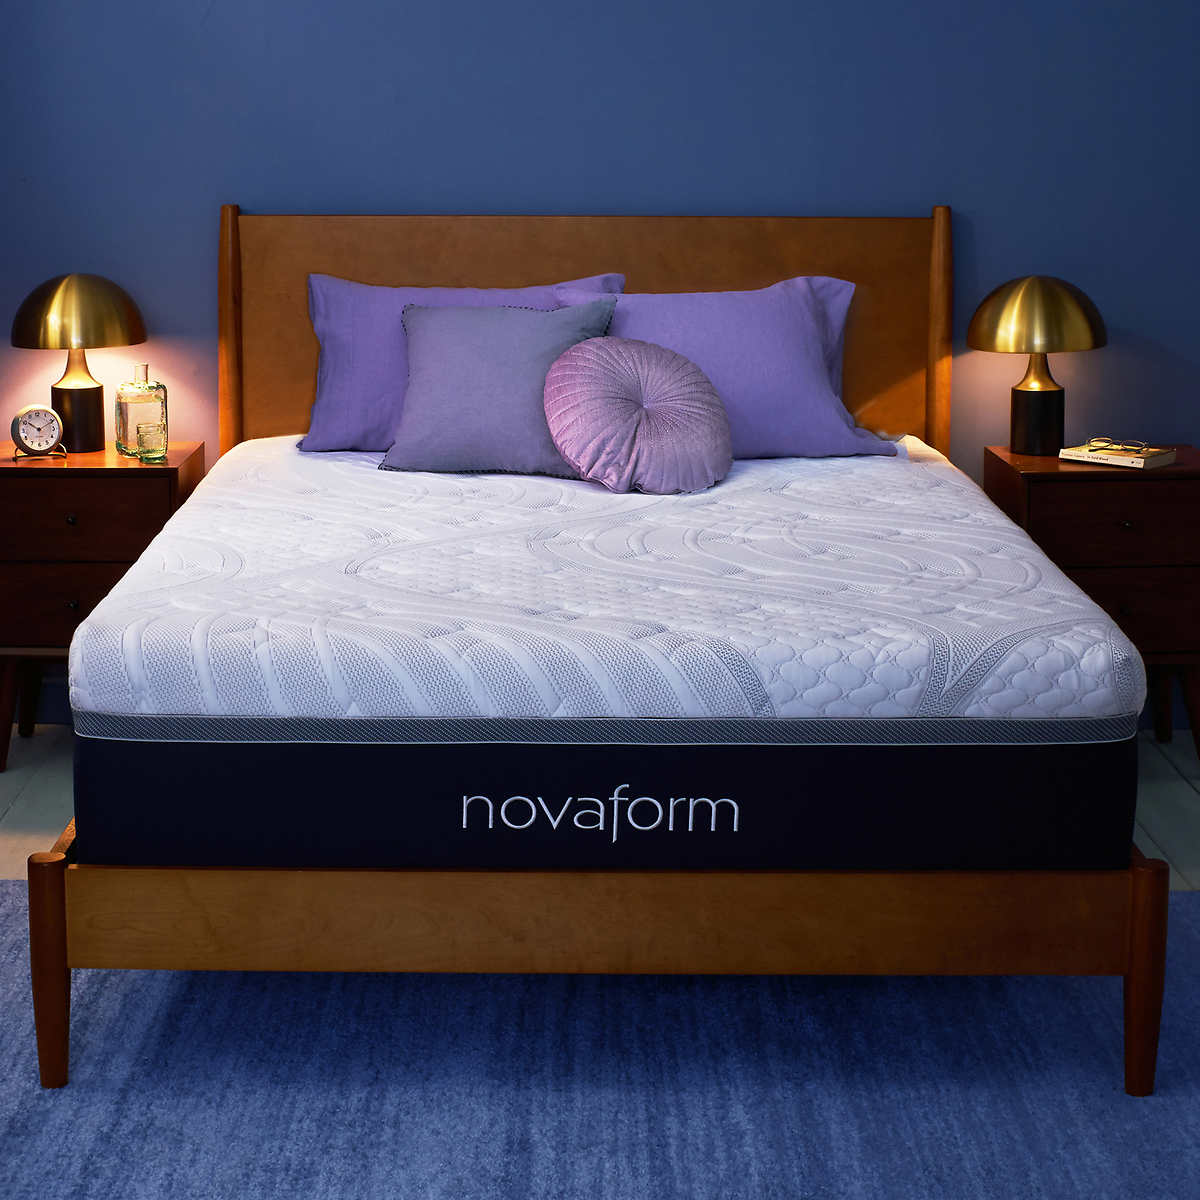 Gel Memory Foam Mattress Medium, Costco Bed In A Box Twin Xl Size